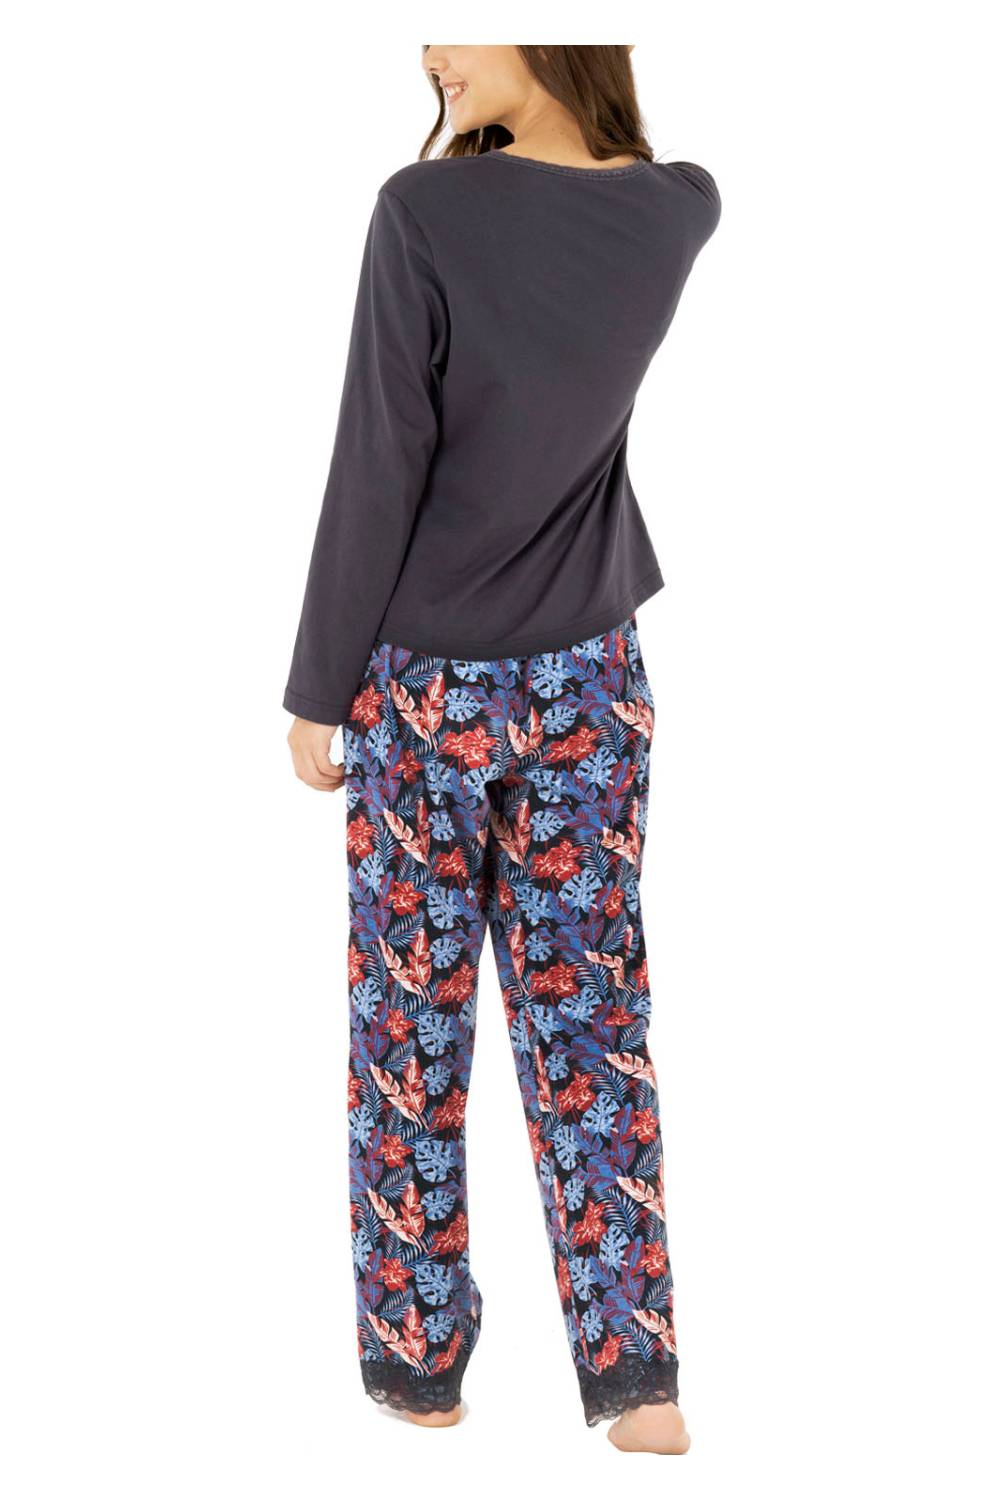 TOP - Pijama mujer manga larga